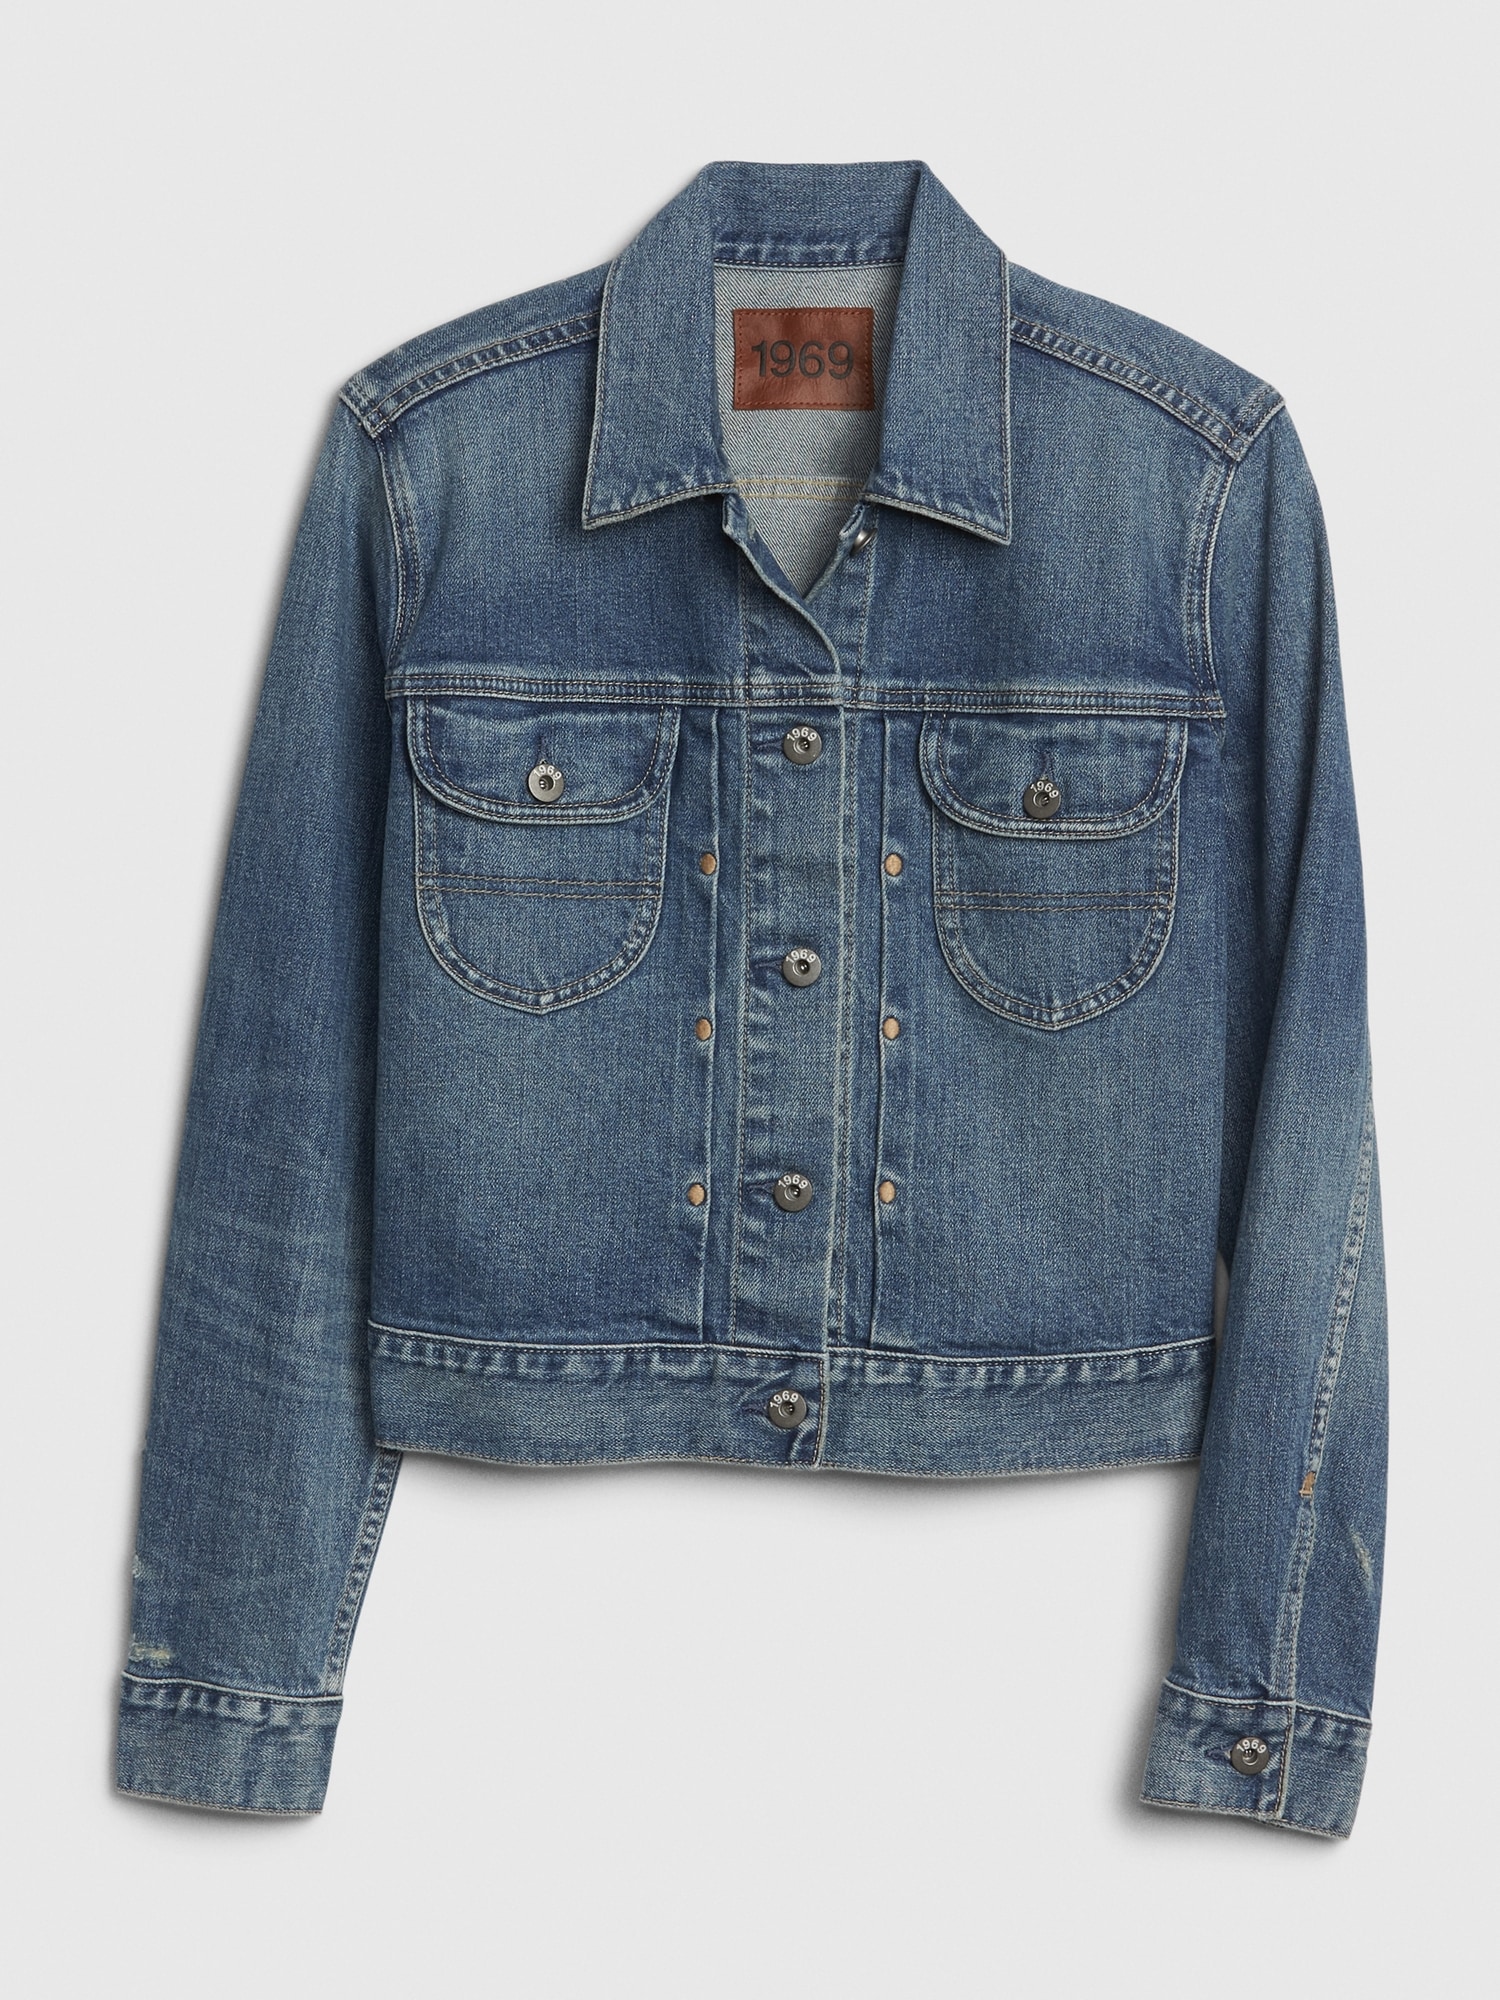 gap 1969 heritage denim jacket